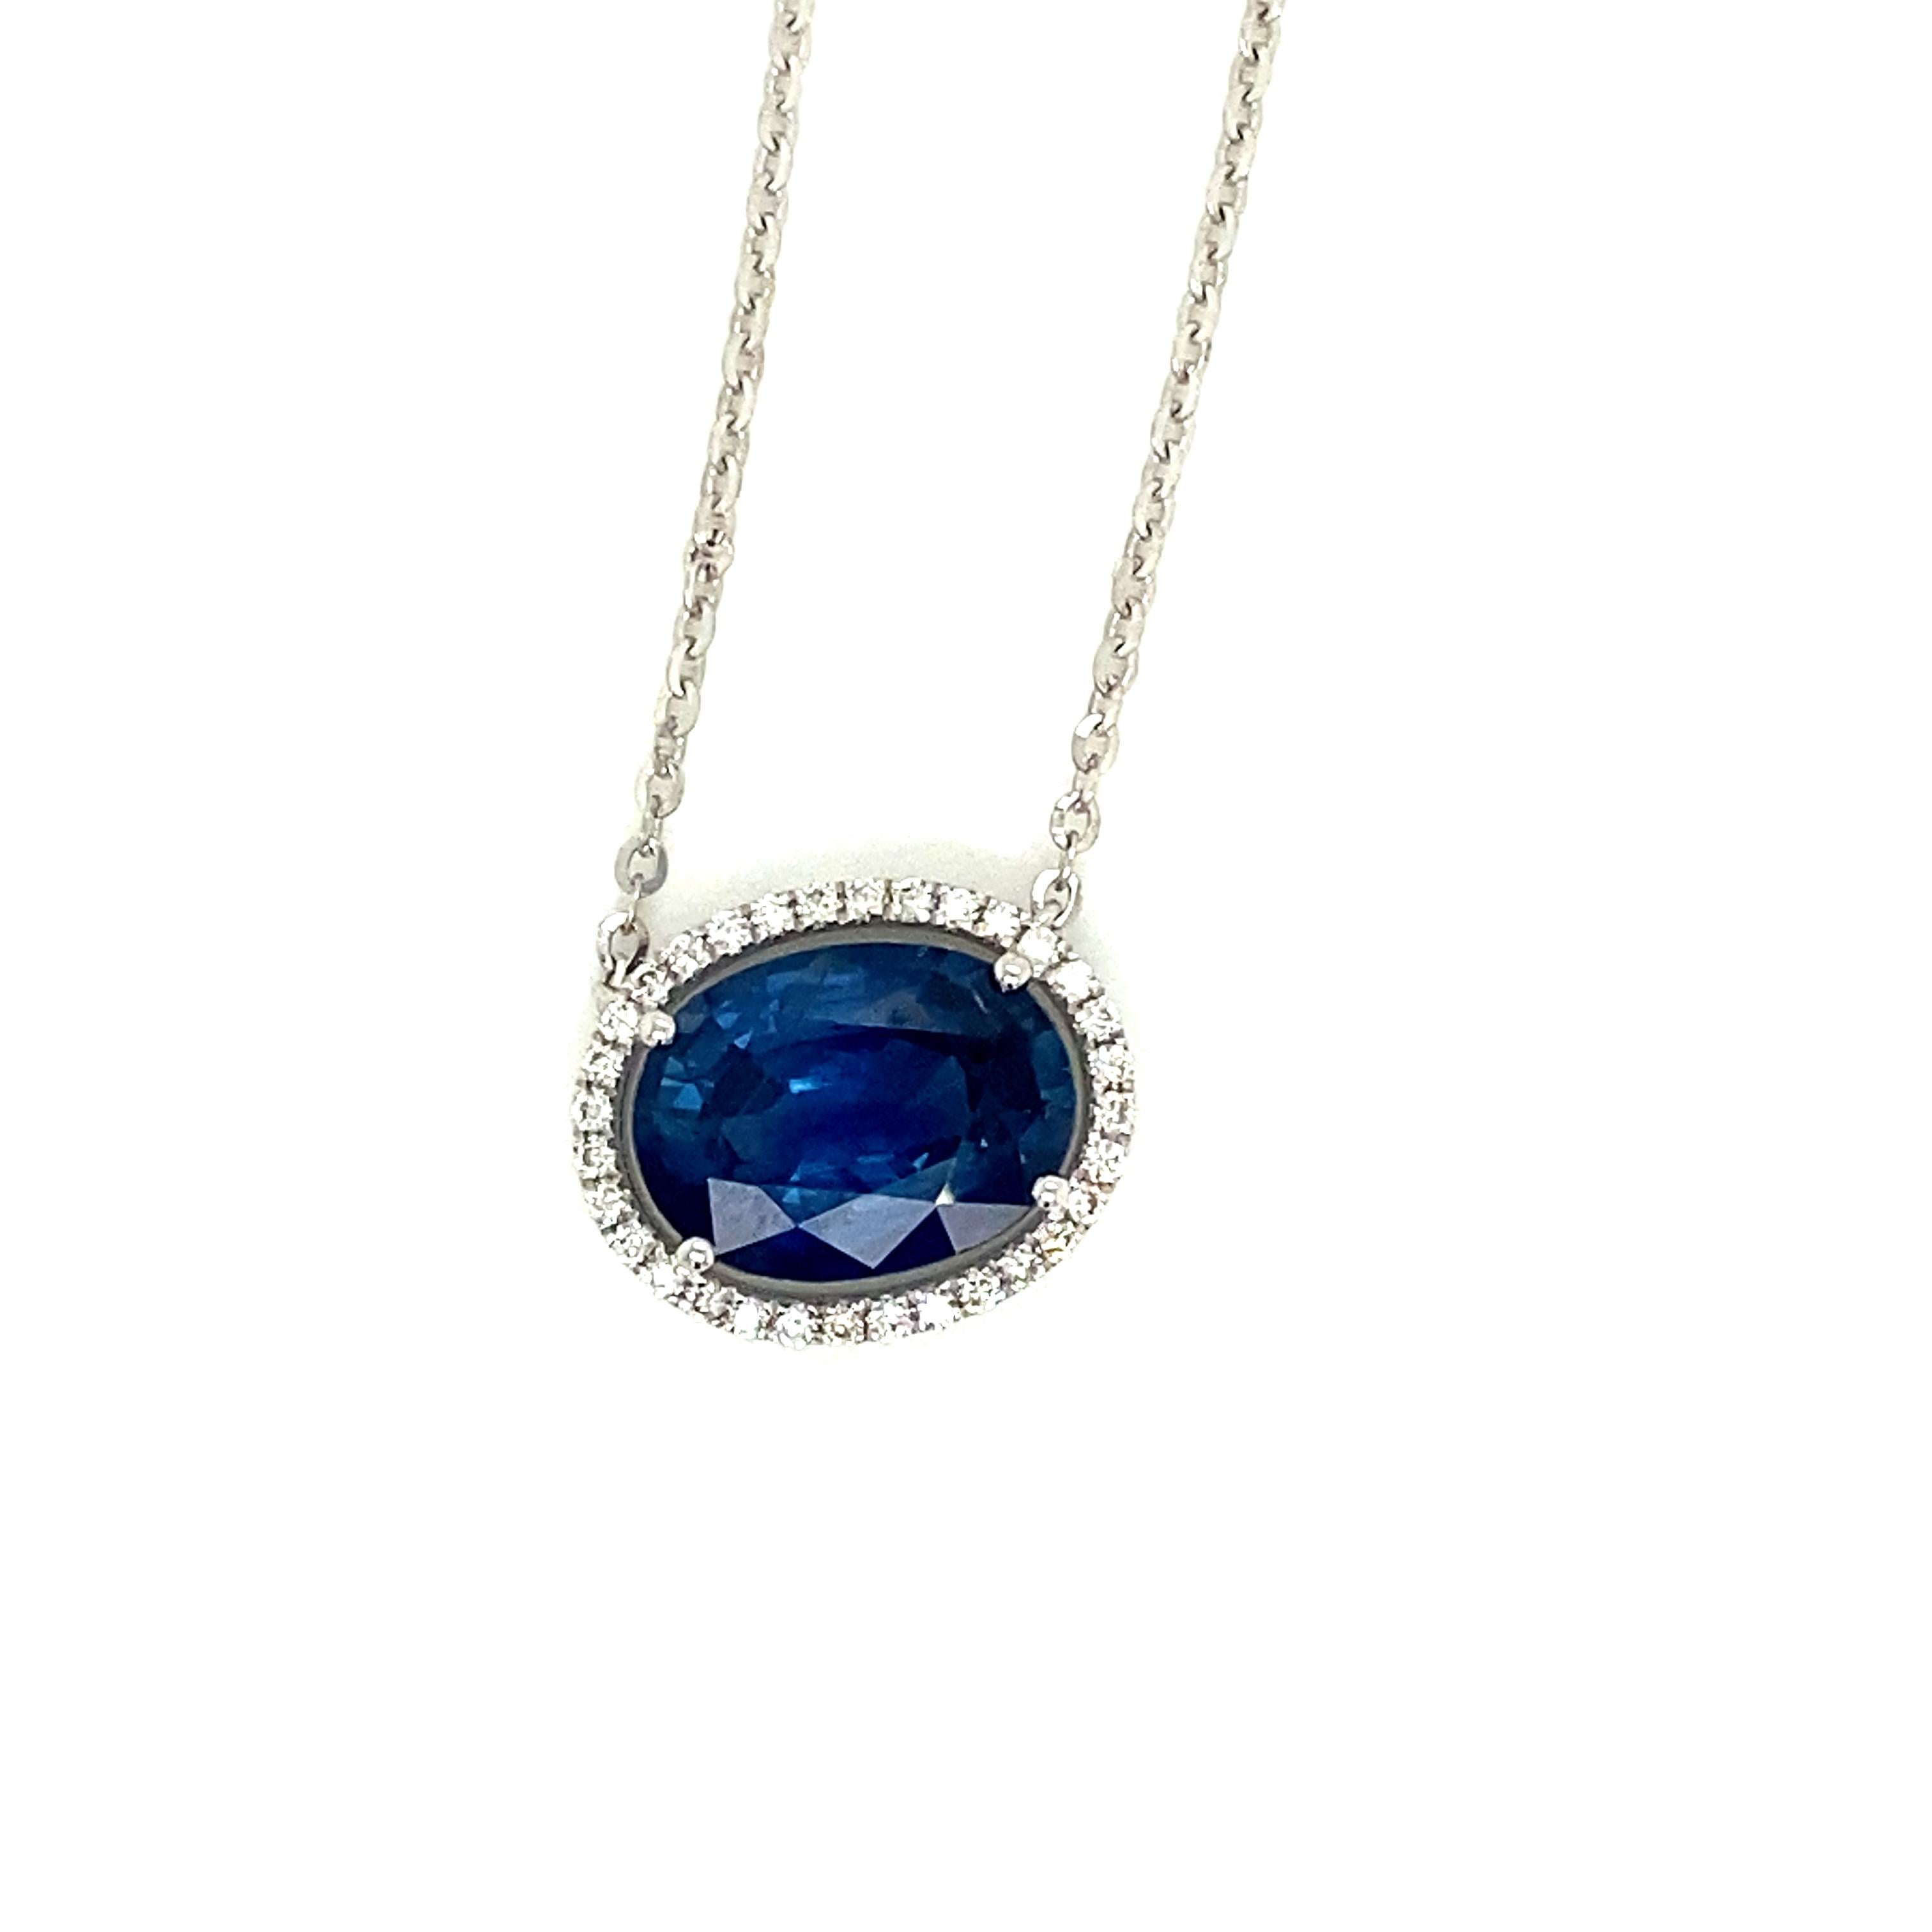 Contemporary 4.96 Carat Oval-Cut Vivid Blue Sapphire and White Diamond Pendant Necklace For Sale